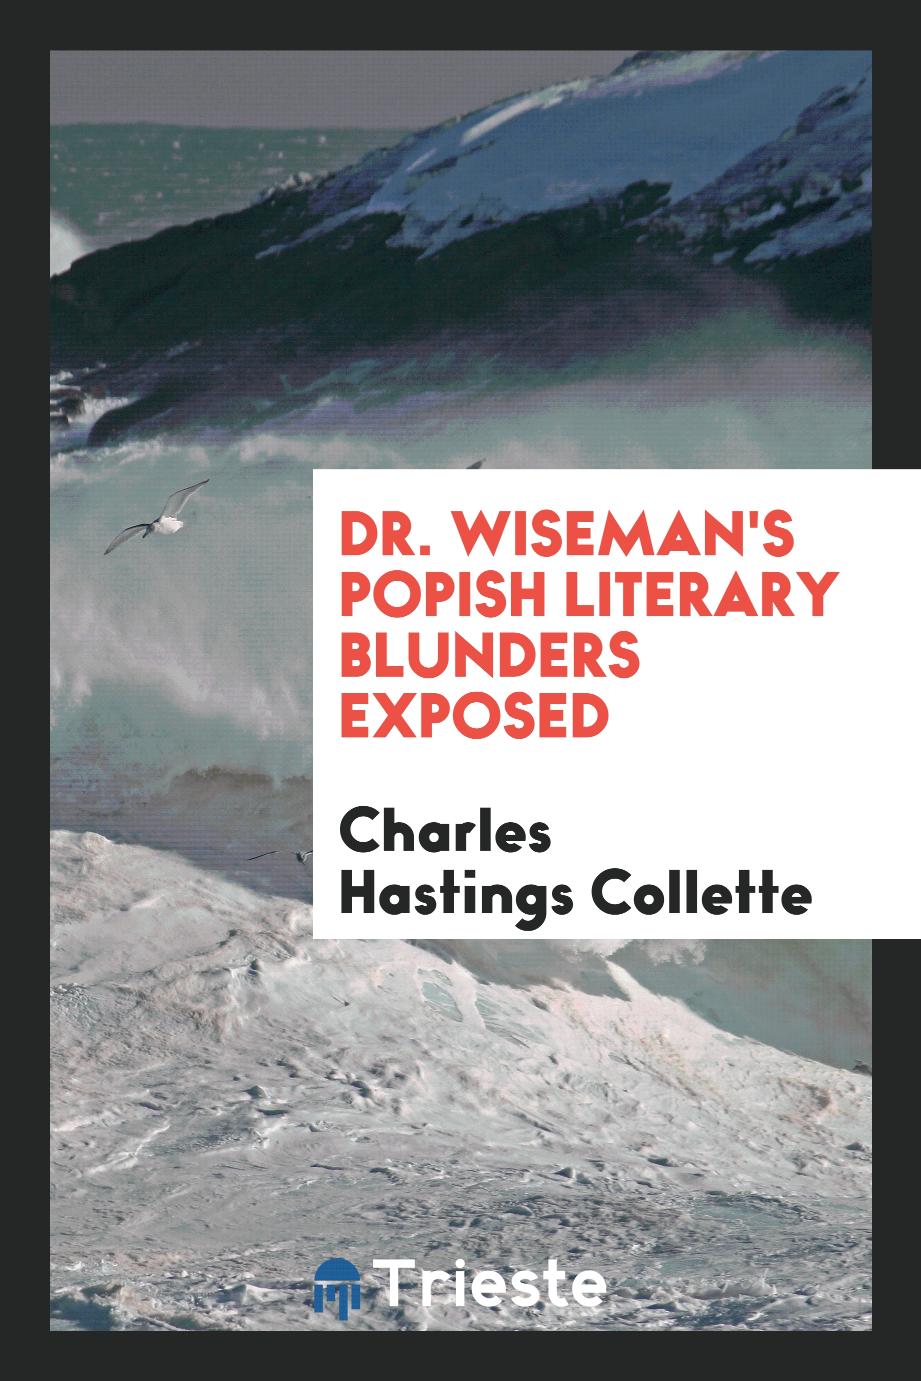 Dr. Wiseman's popish literary blunders exposed